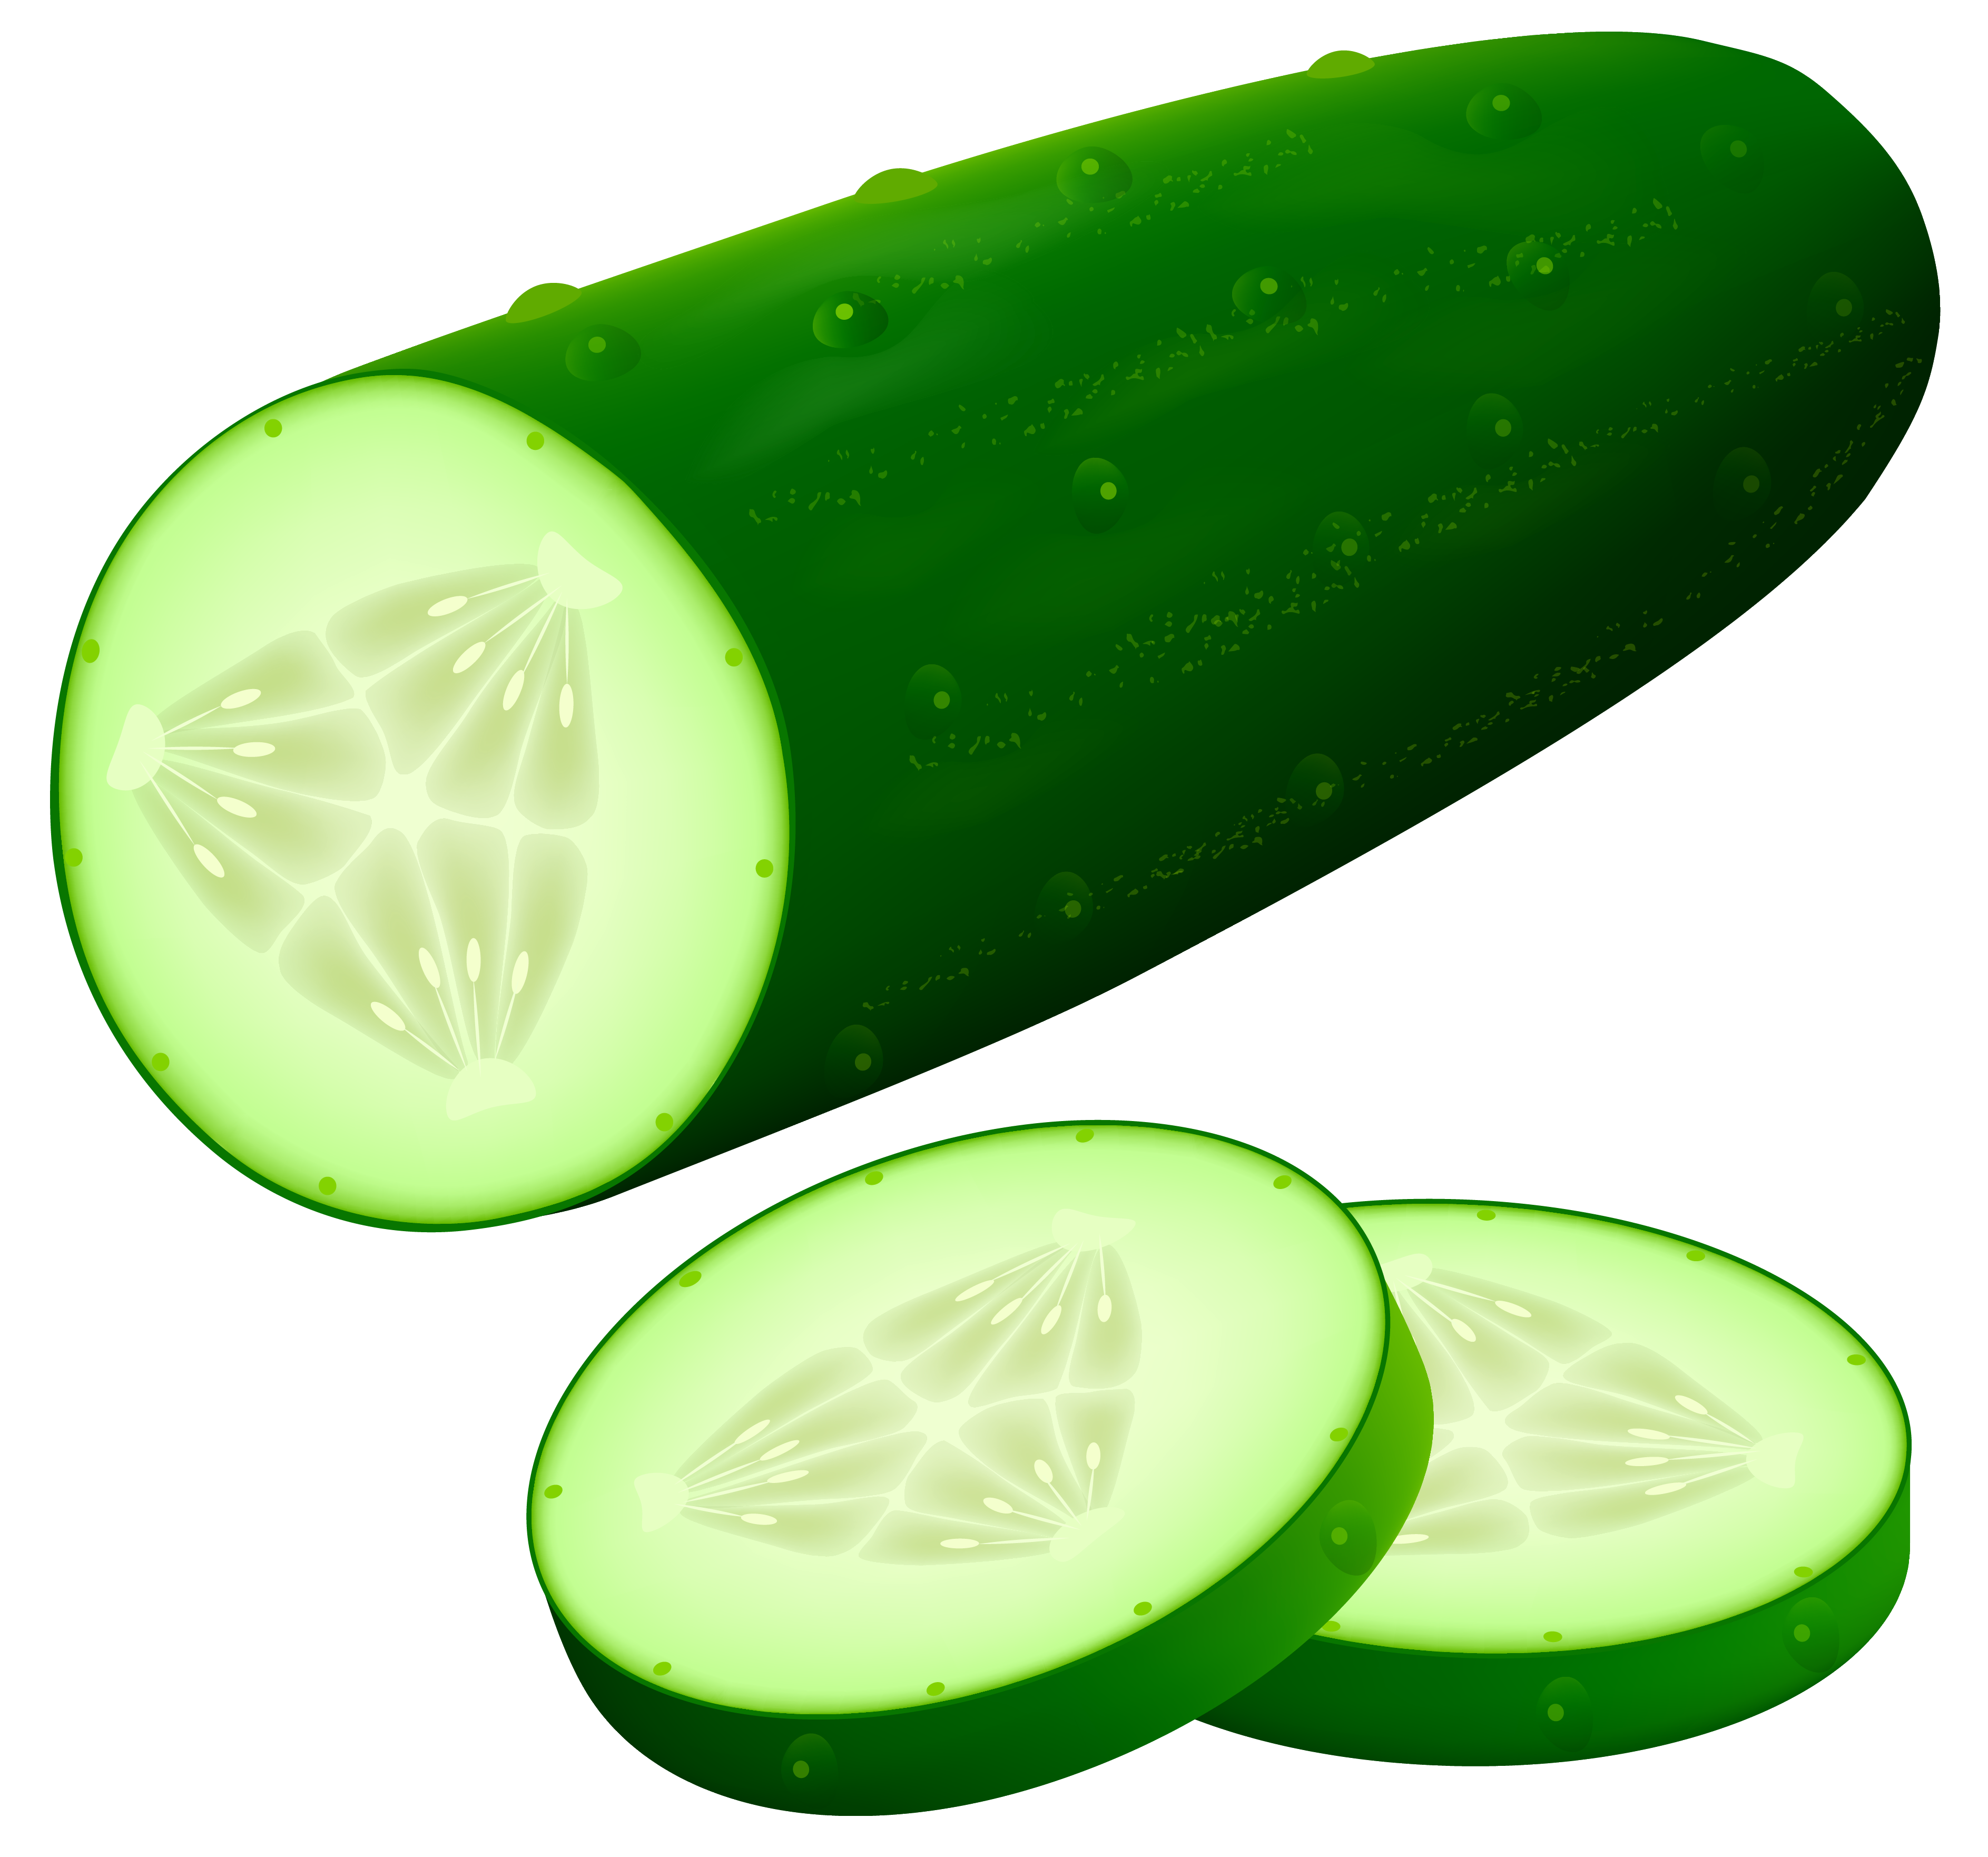 Cucumber PNG Clipart Image - Best WEB Clipart